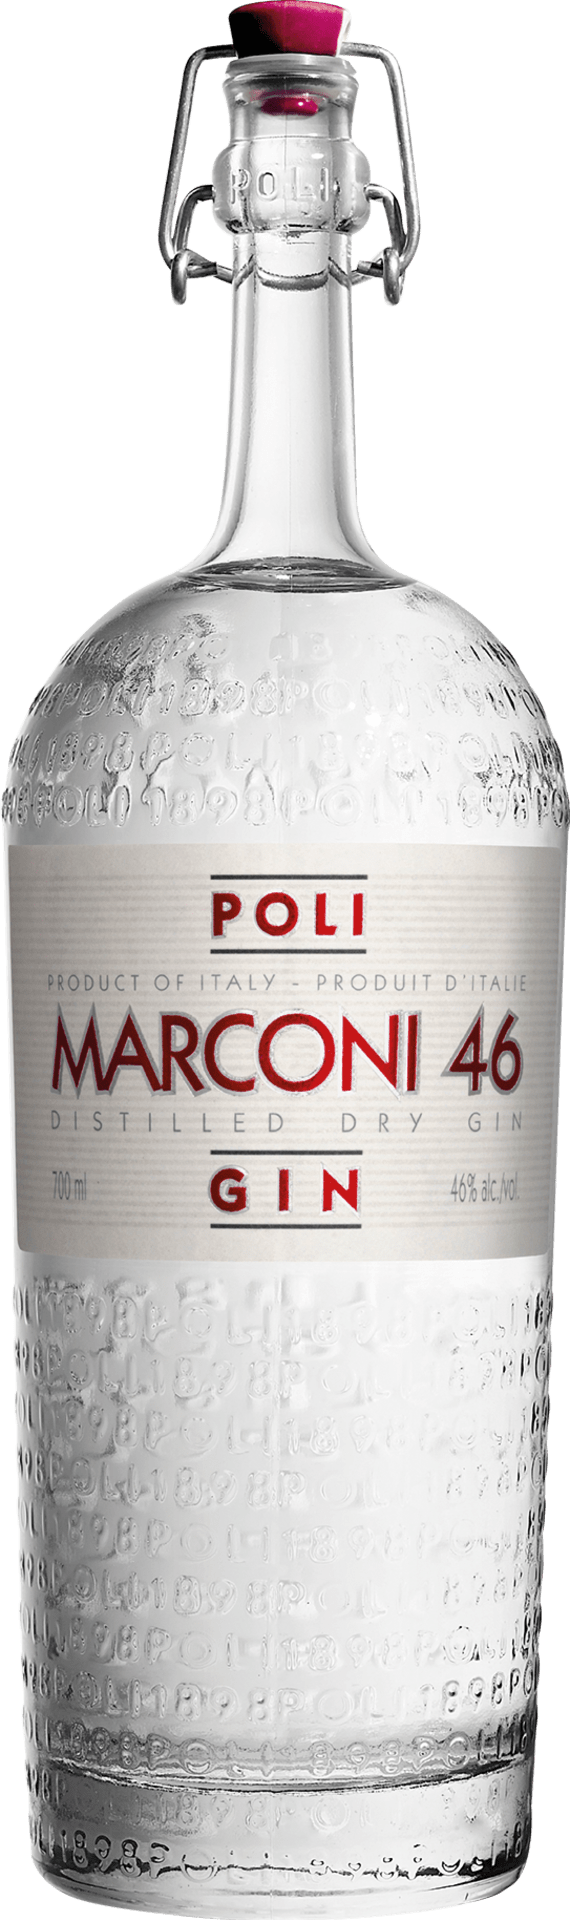 Marconi 46 Gin